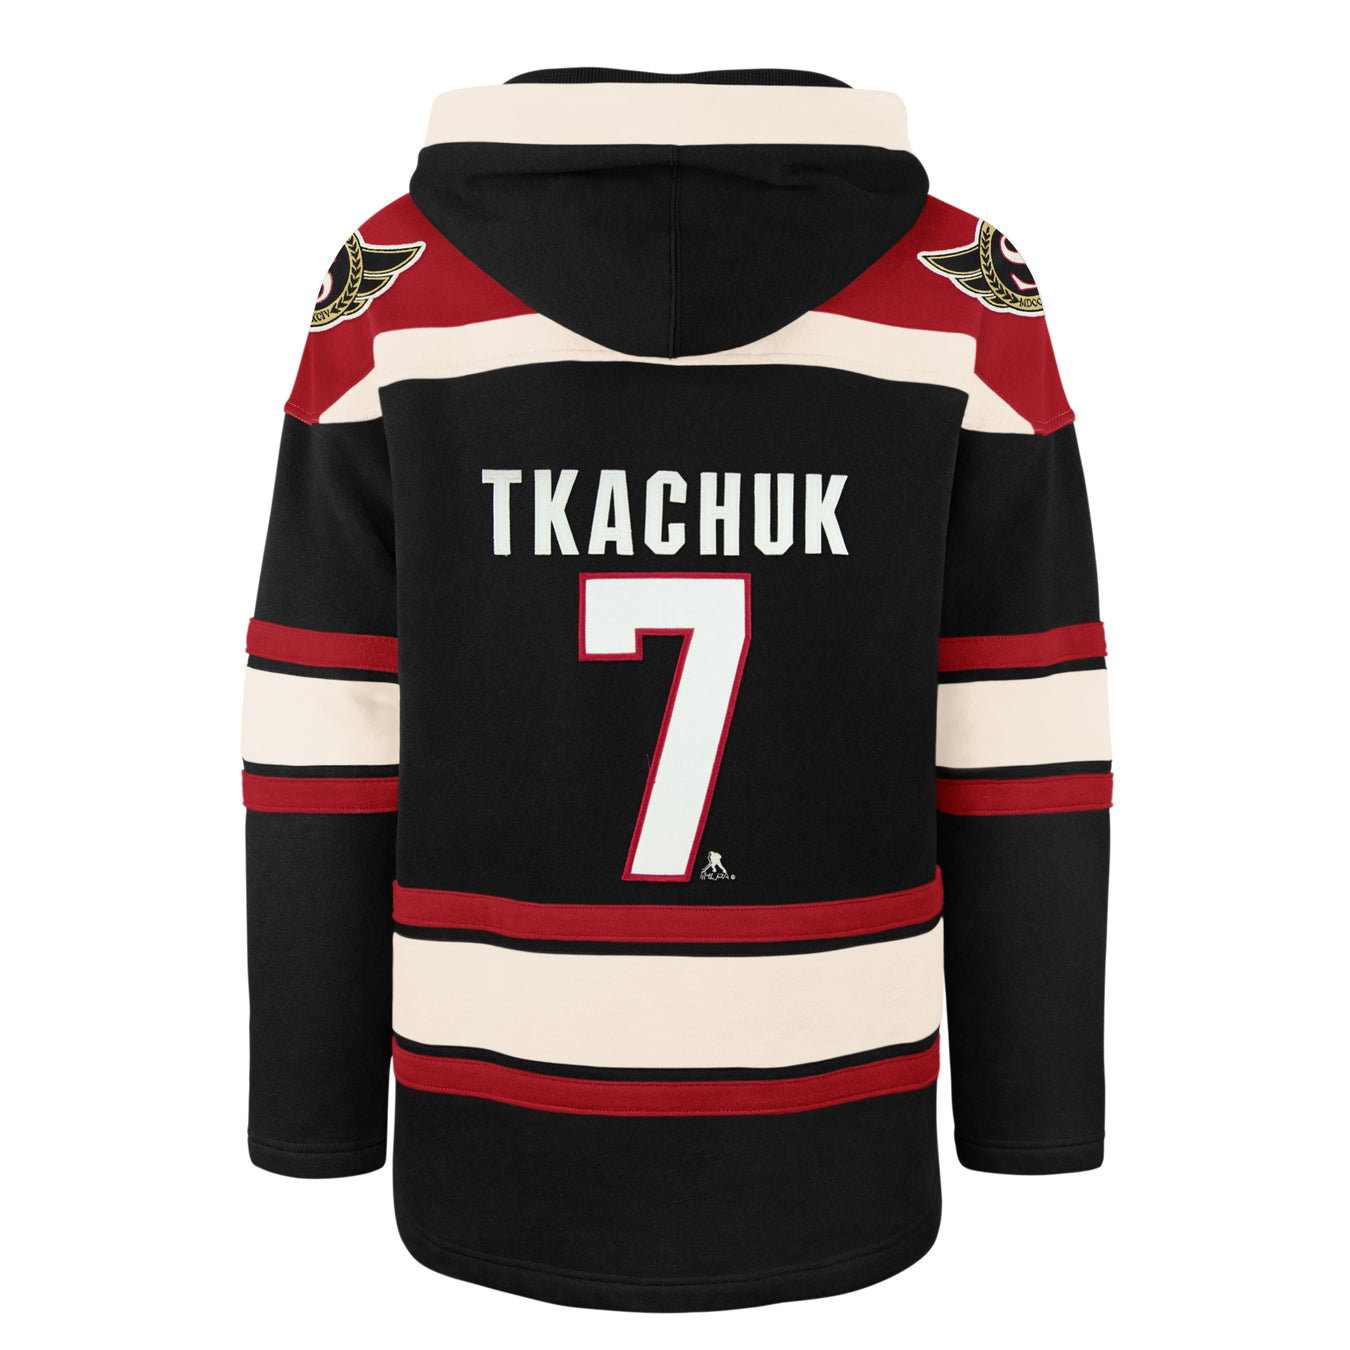 Brady Tkachuk NHL Jerseys, Apparel, and Collectibles